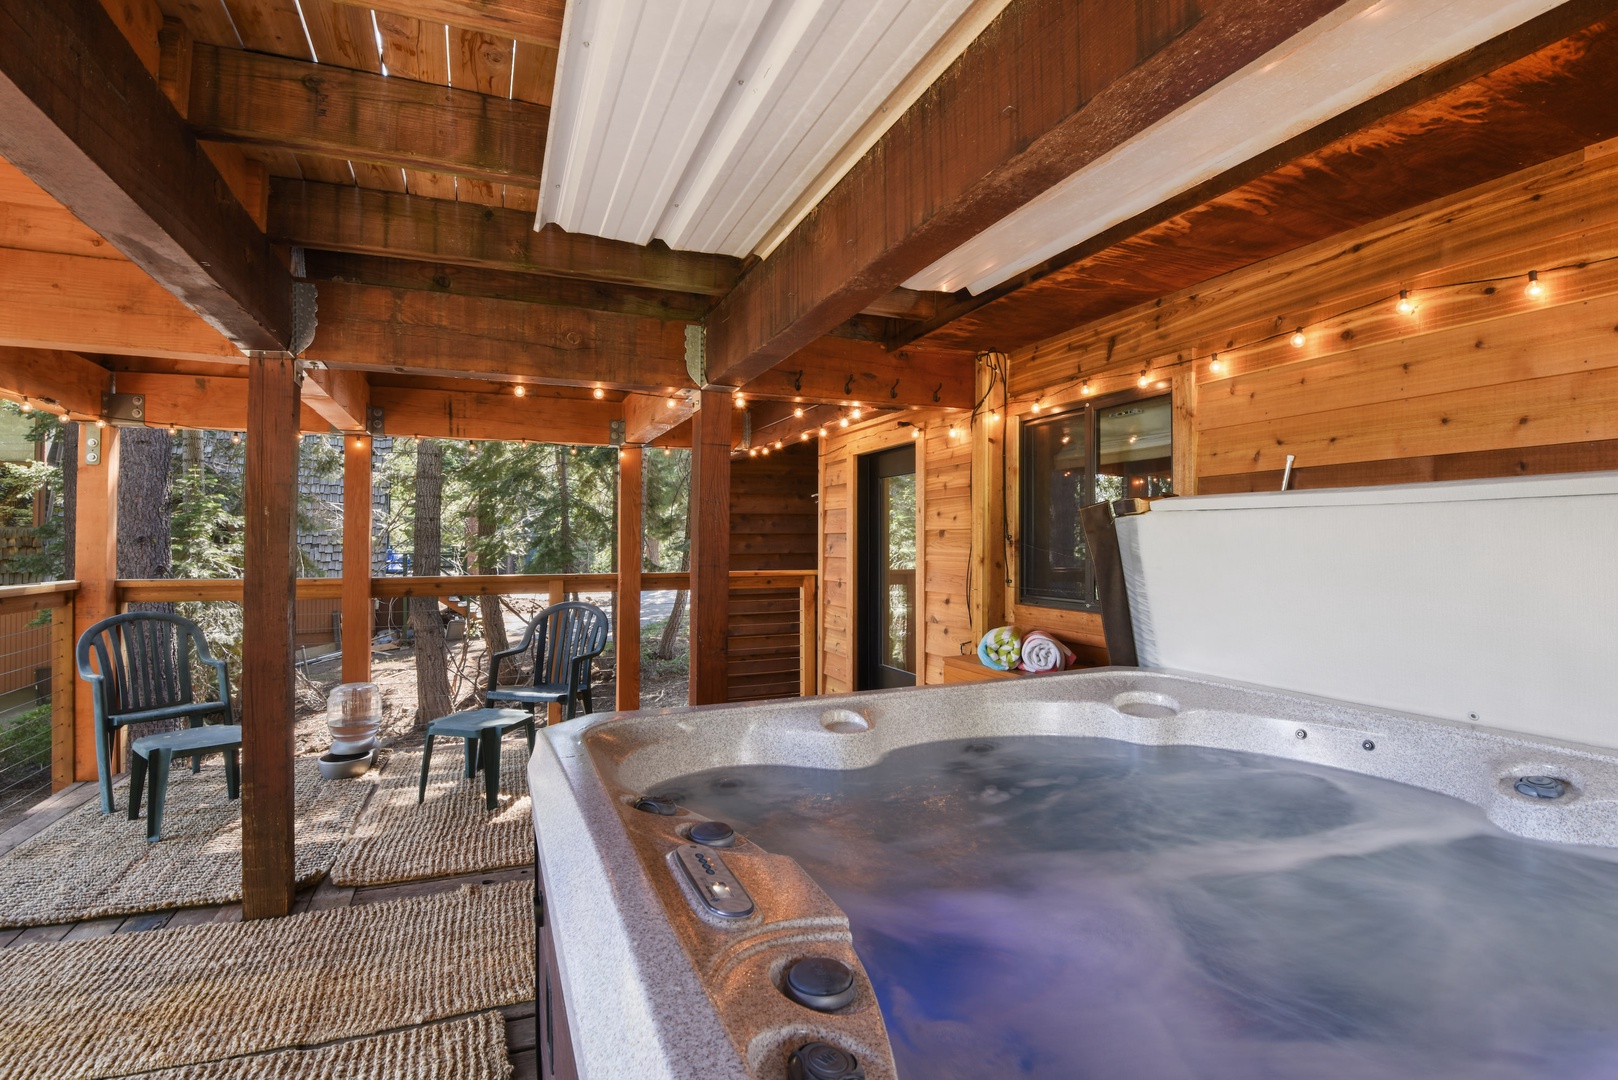 Take a dip in the private hot tub